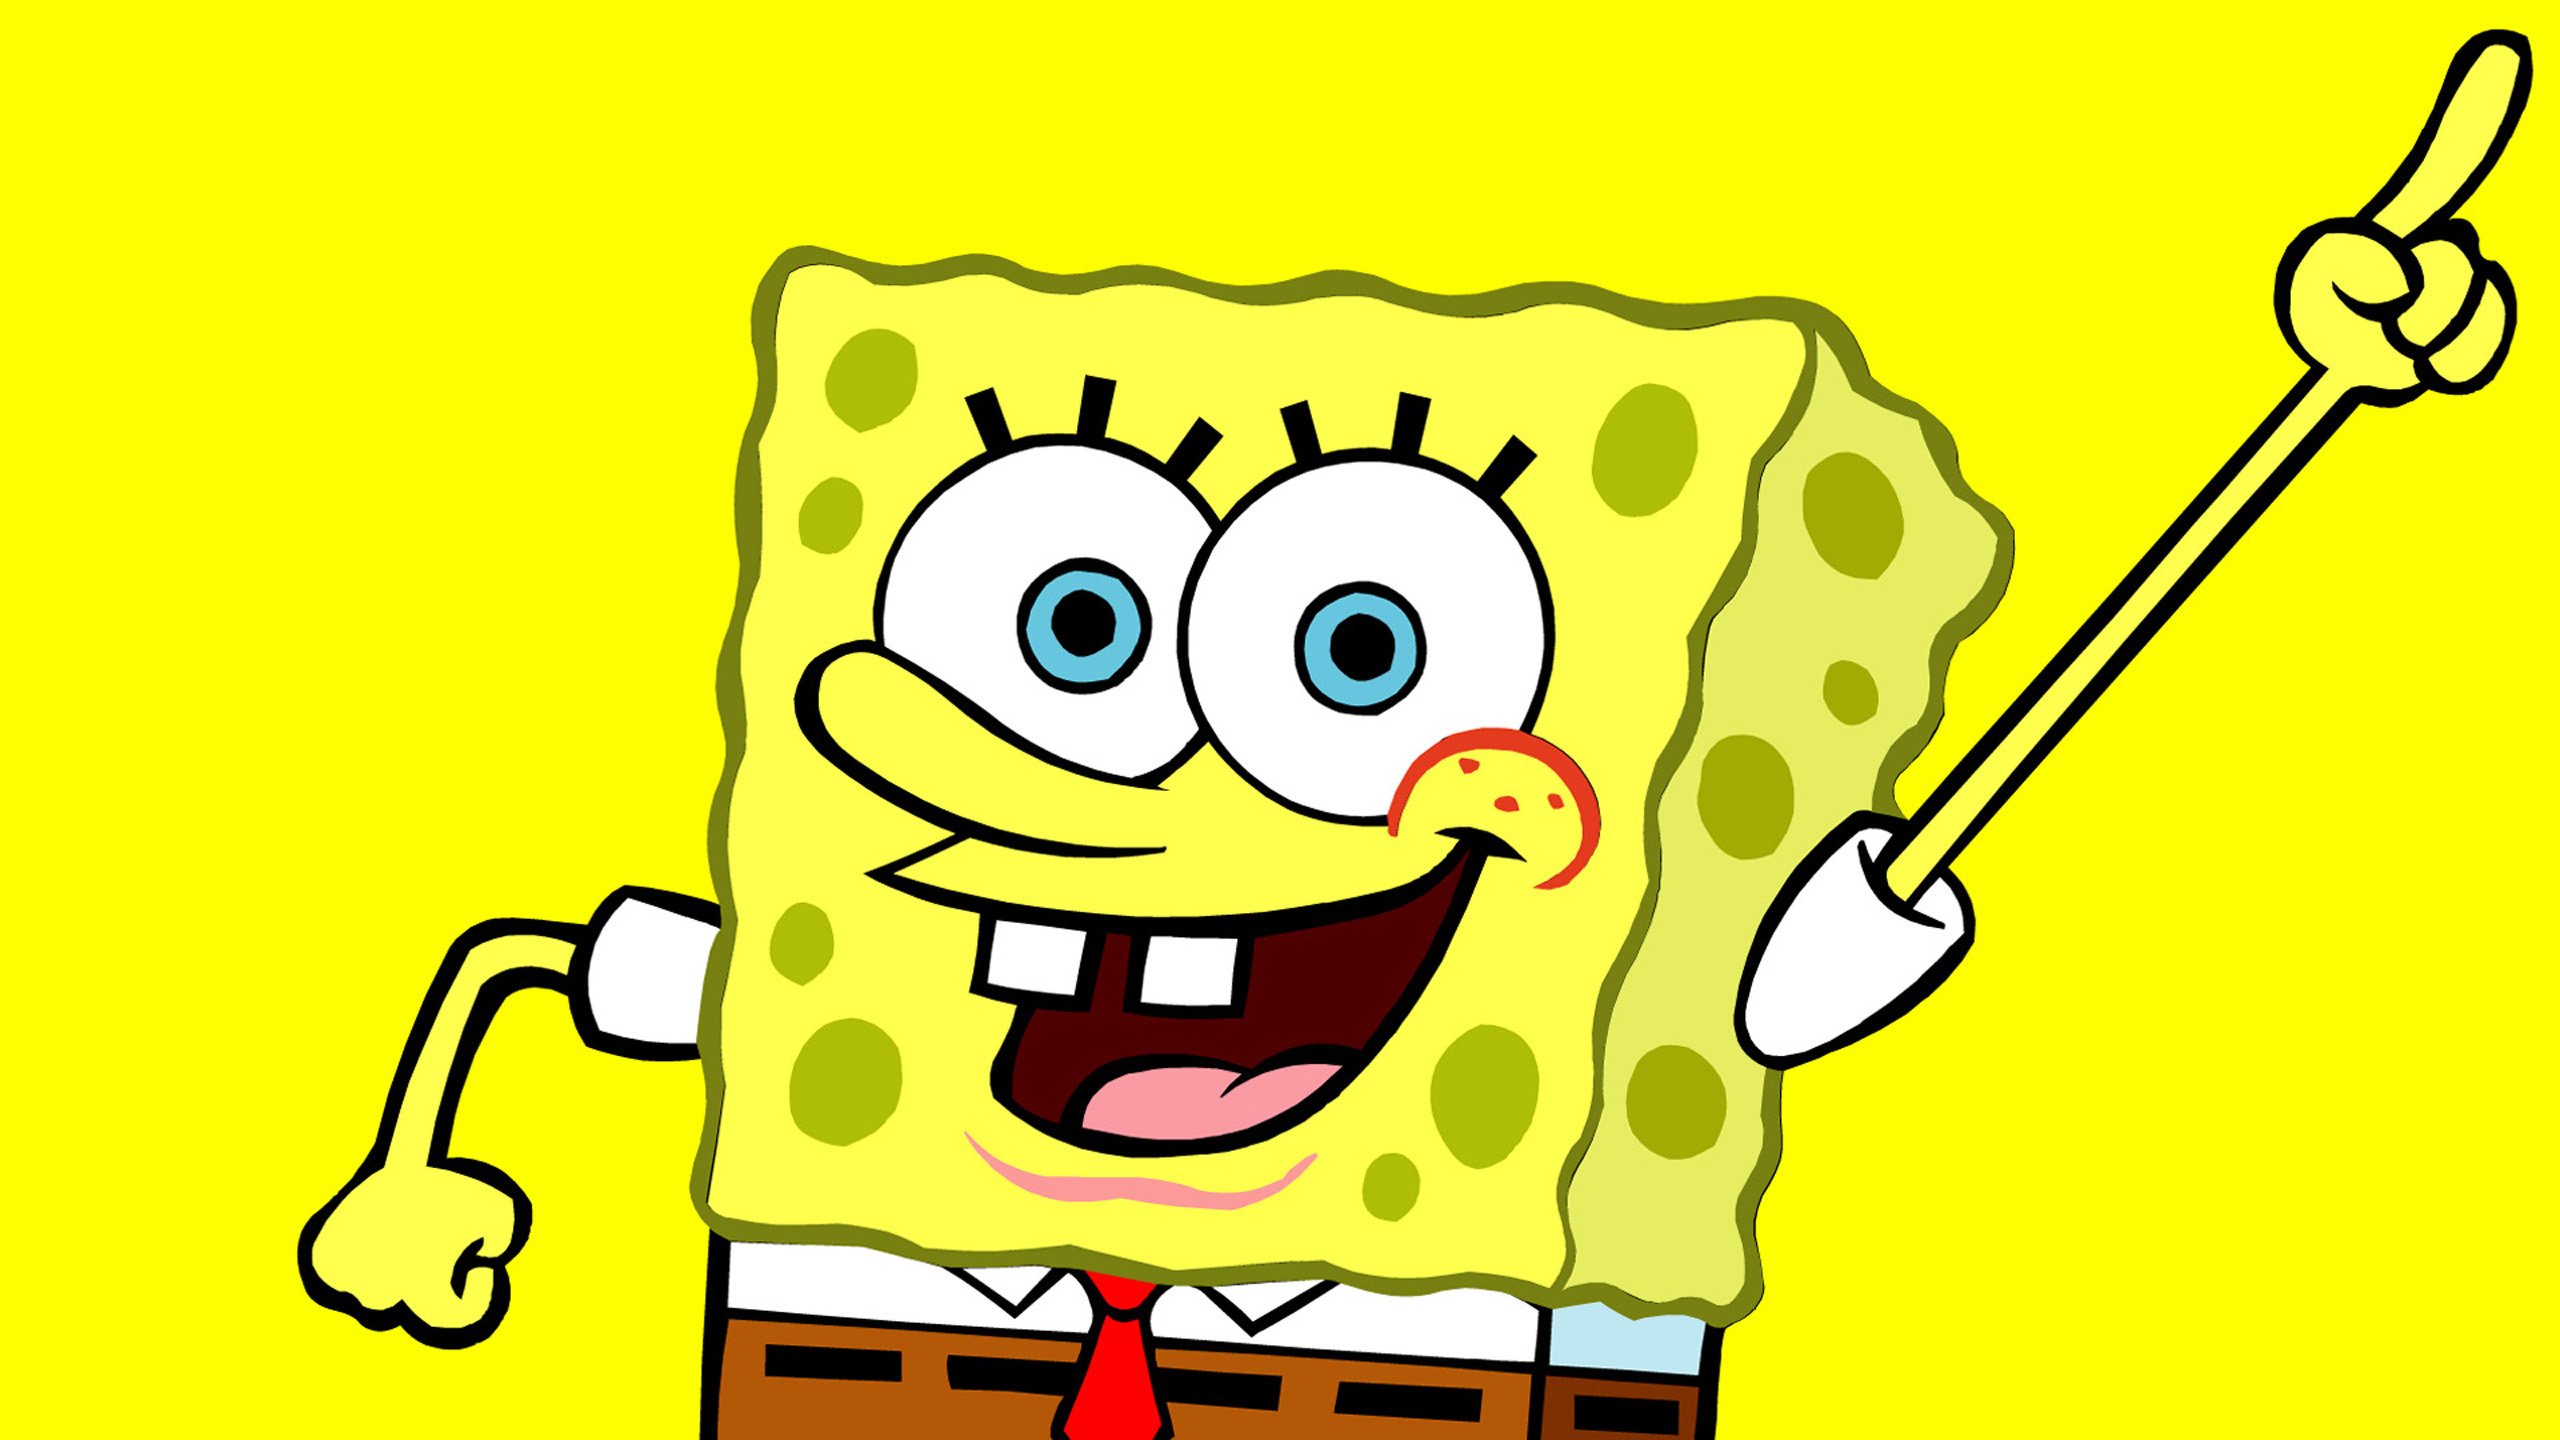 Spongebob Squarepants Cartoon Family Animation Wallpaper Background